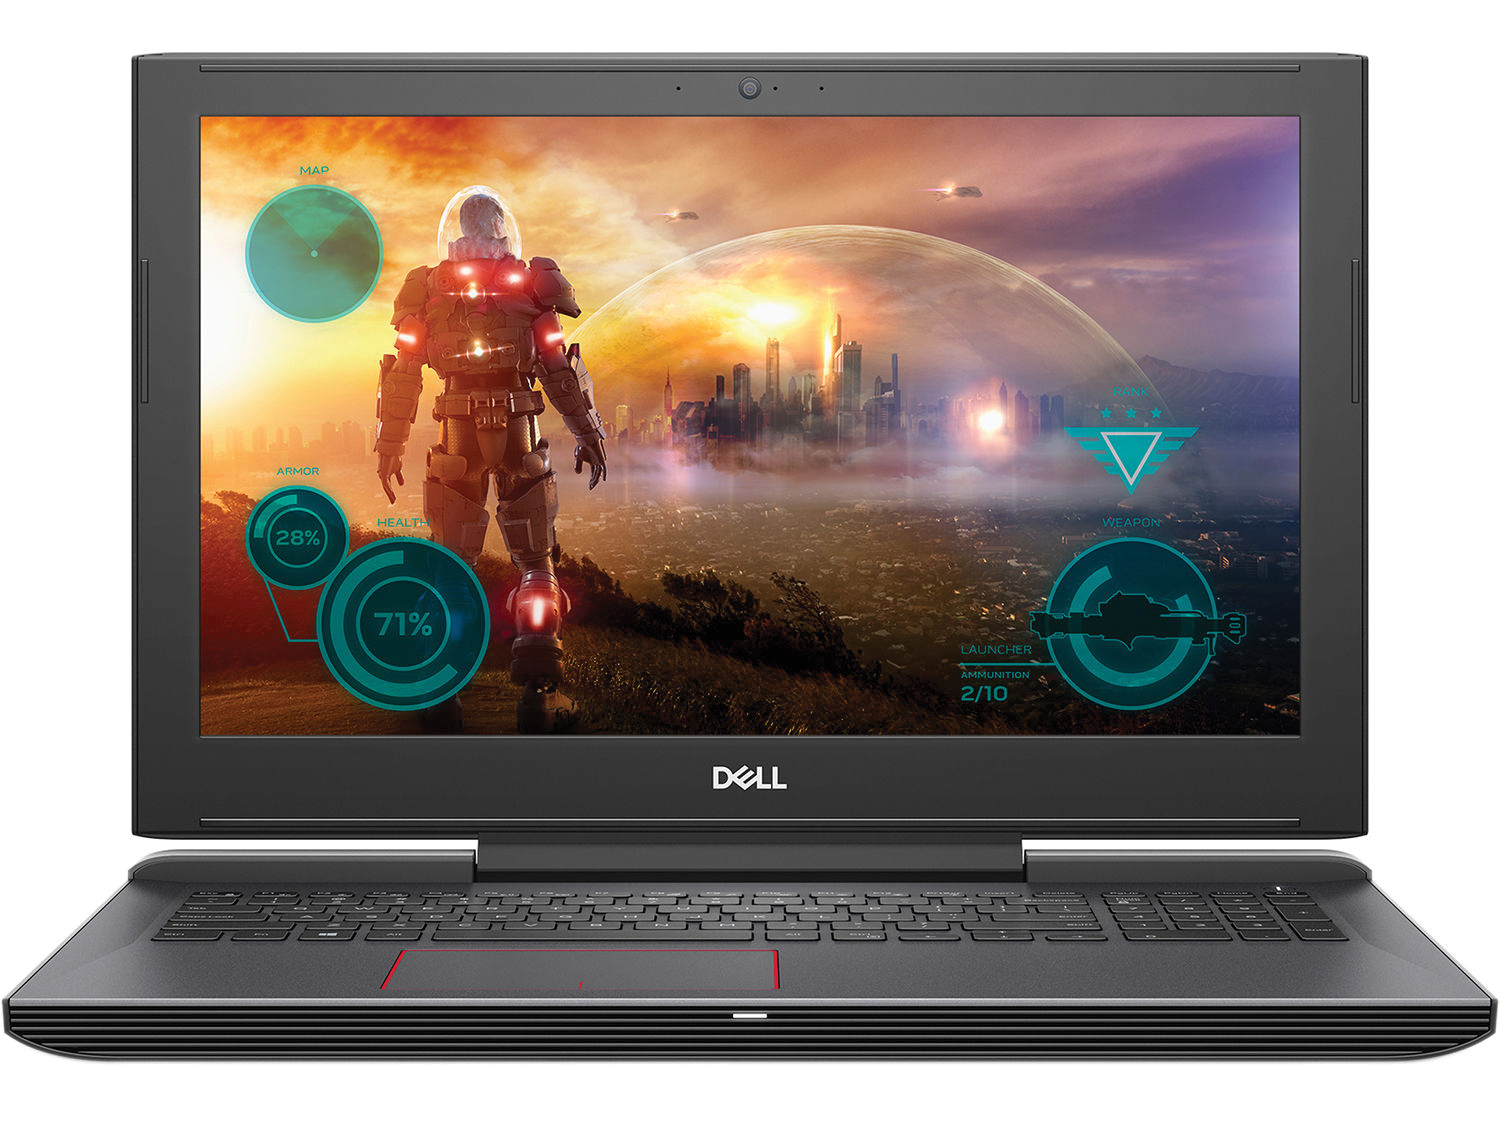 Laptop Dell Inspiron G7 N7588B P72F002 - Intel core i7, 16GB RAM, SSD 256GB + HDD 1TB, Nvidia GeForce GTX 1060 Ti with 6GB GDDR5 Max Q Design, 15.6 inch